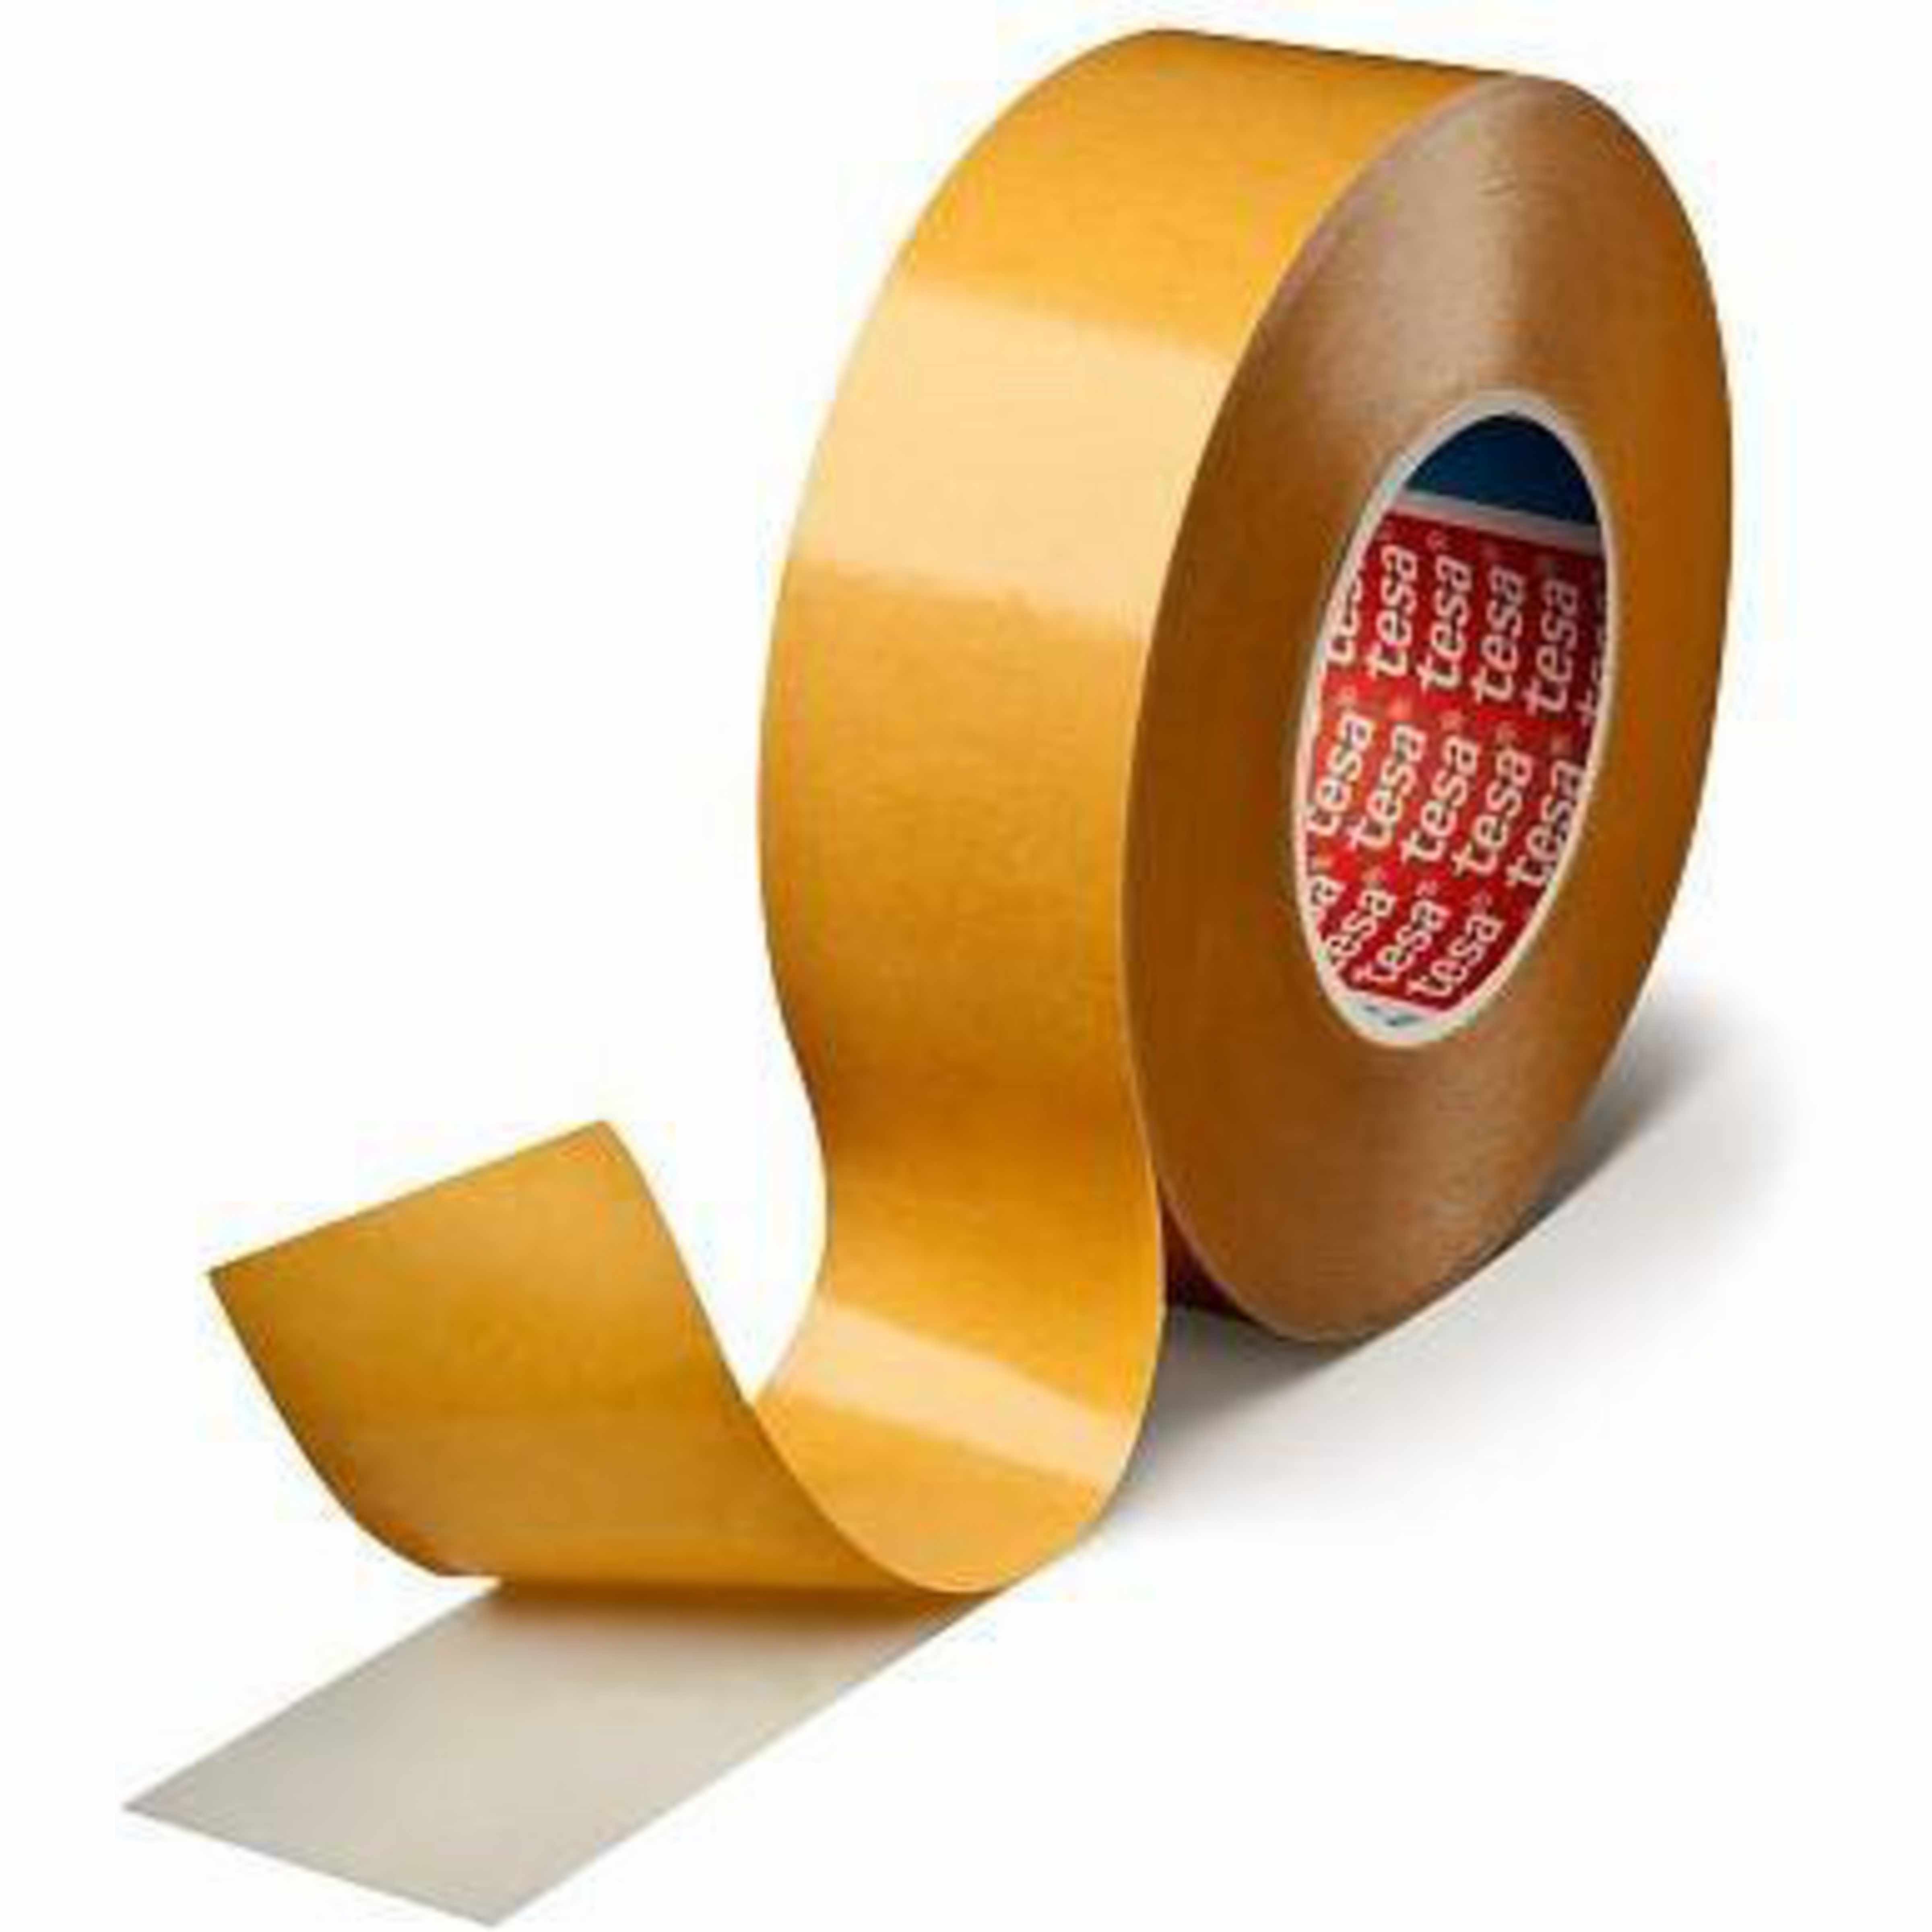 gouden Pilfer bijvoeglijk naamwoord Tesa dubbelzijdige tape 4964 50mm x 50m - Dubbelzijdige tape